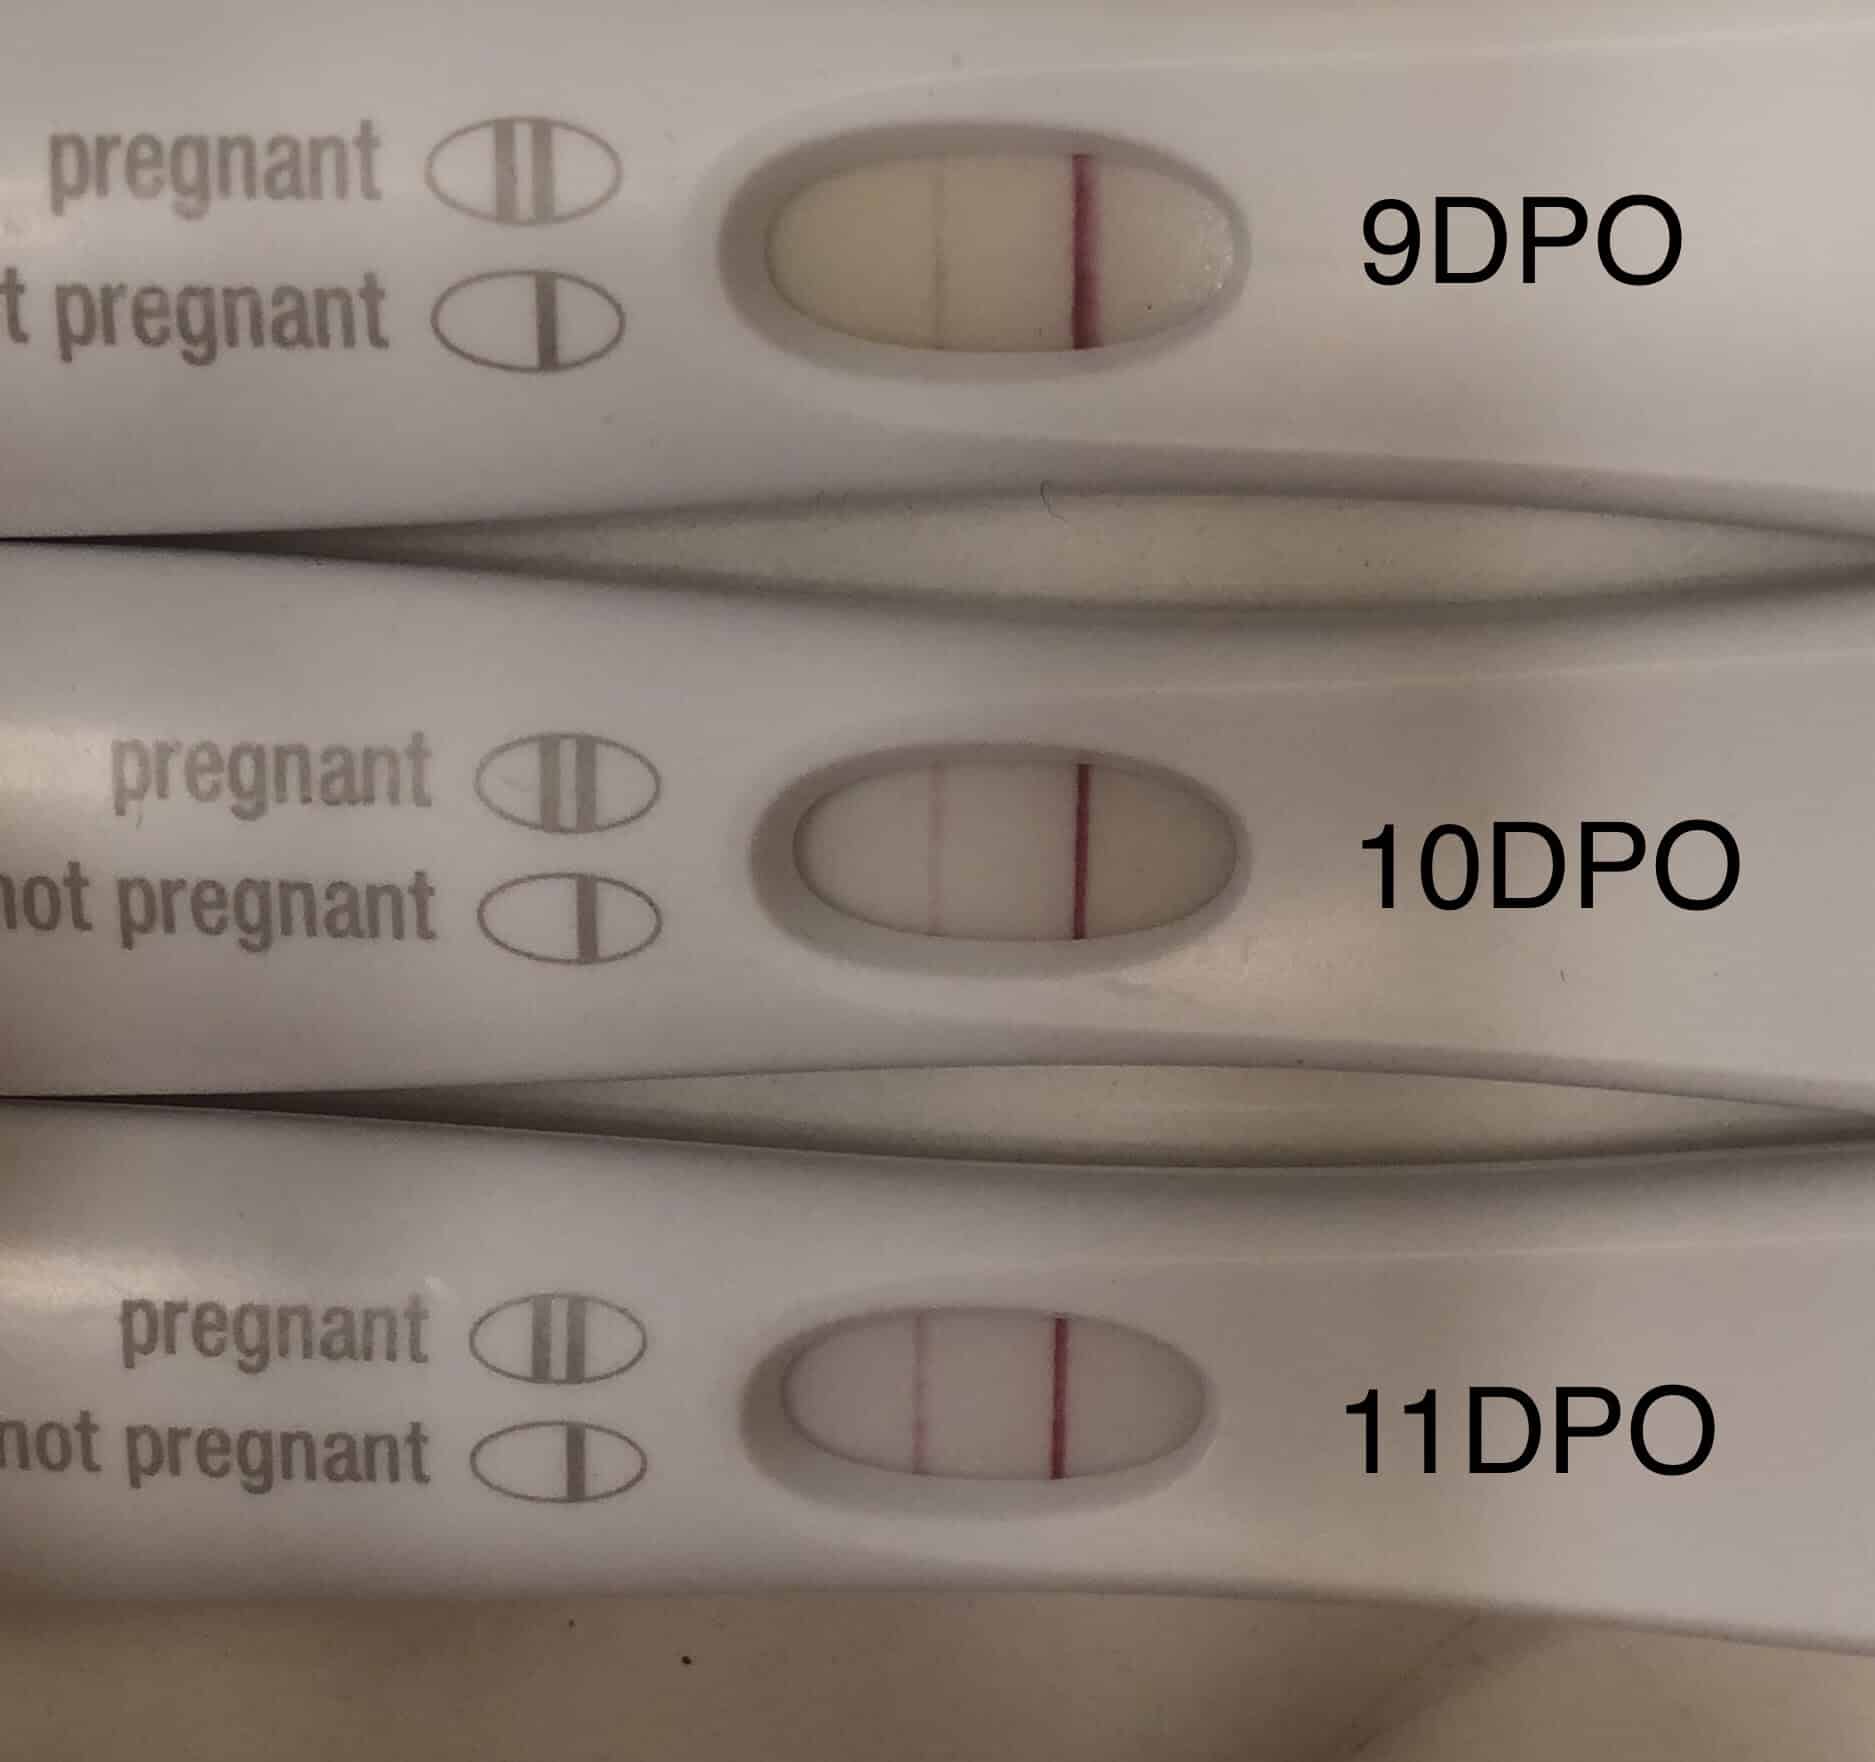 Is Implantation Bleeding Pregnancy Test